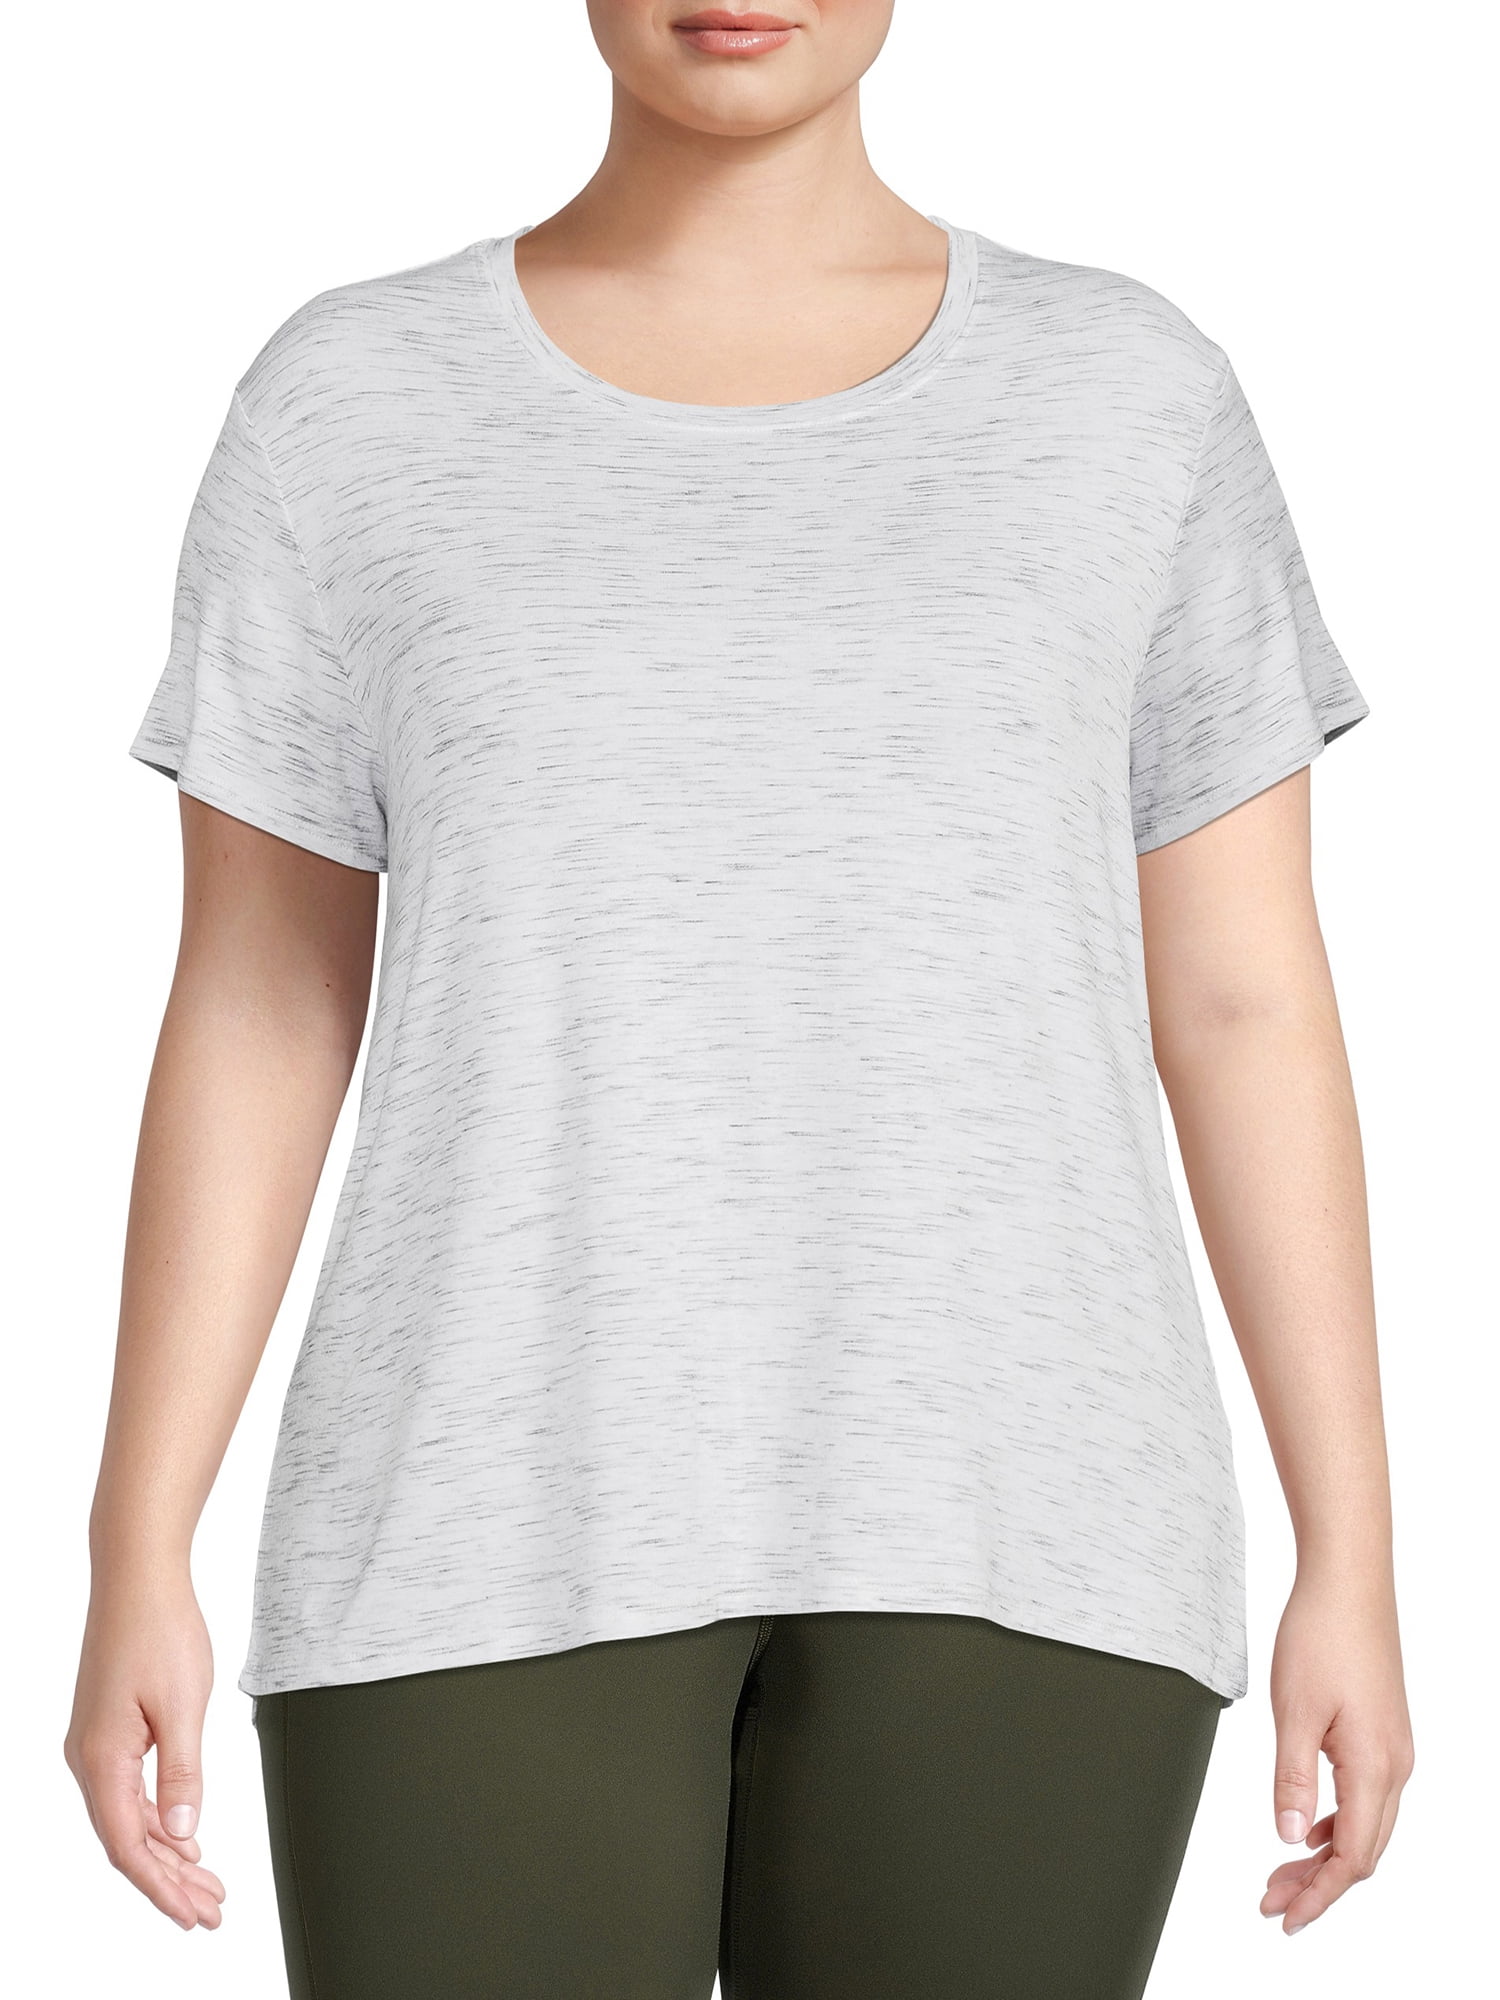 Avia Women's Plus Size Commuter T-Shirt with Short Sleeves - Walmart.com